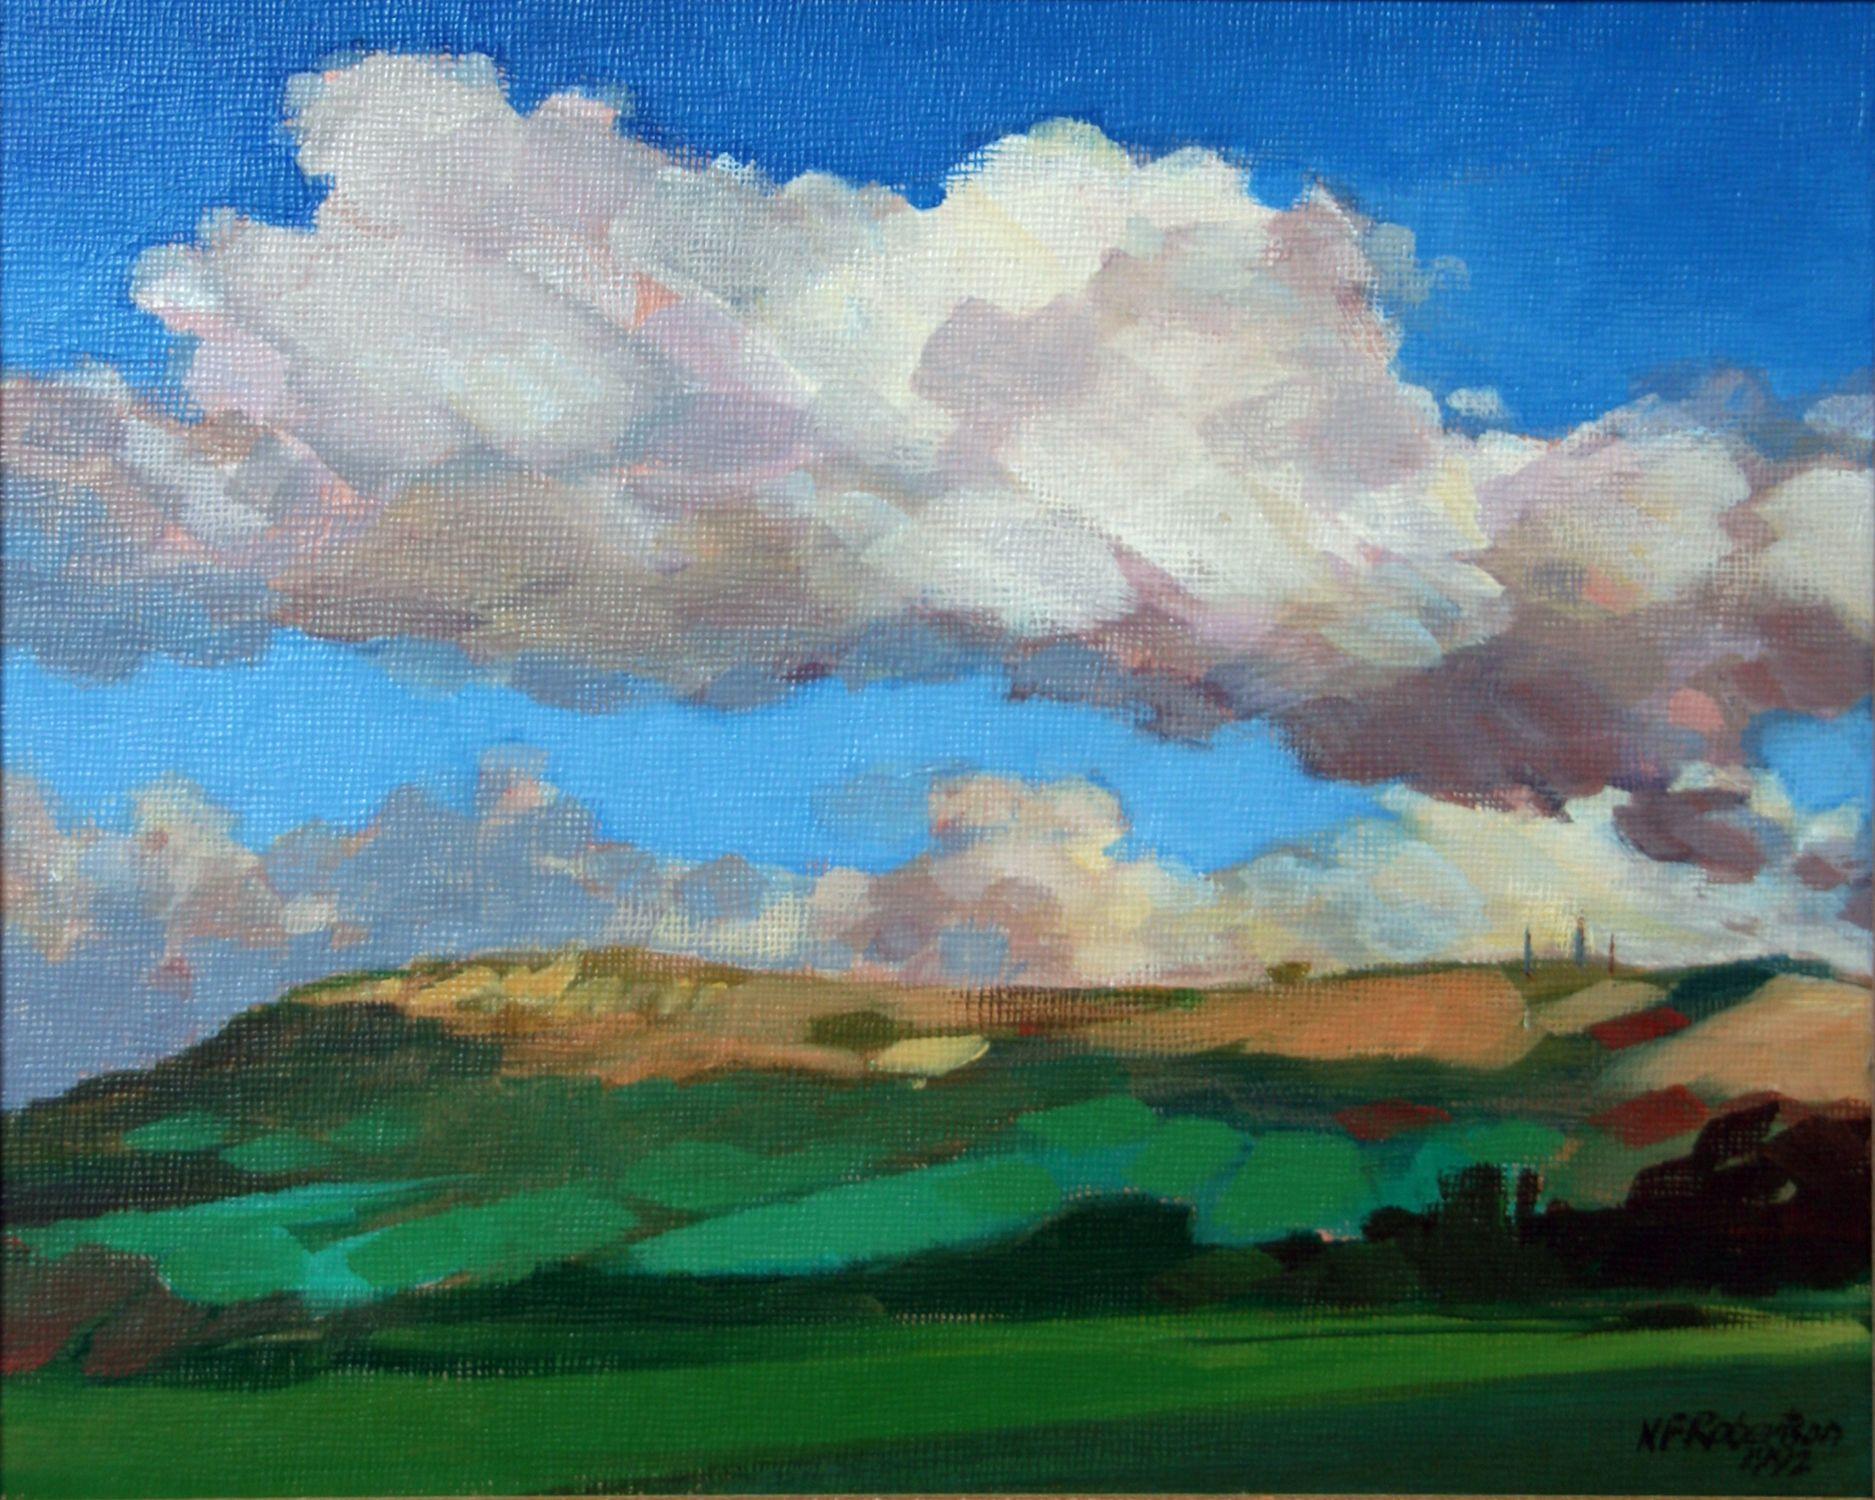 Nicholas Robertson Landscape Painting - Cleeve Cloud, Painting, Acrylic on Canvas